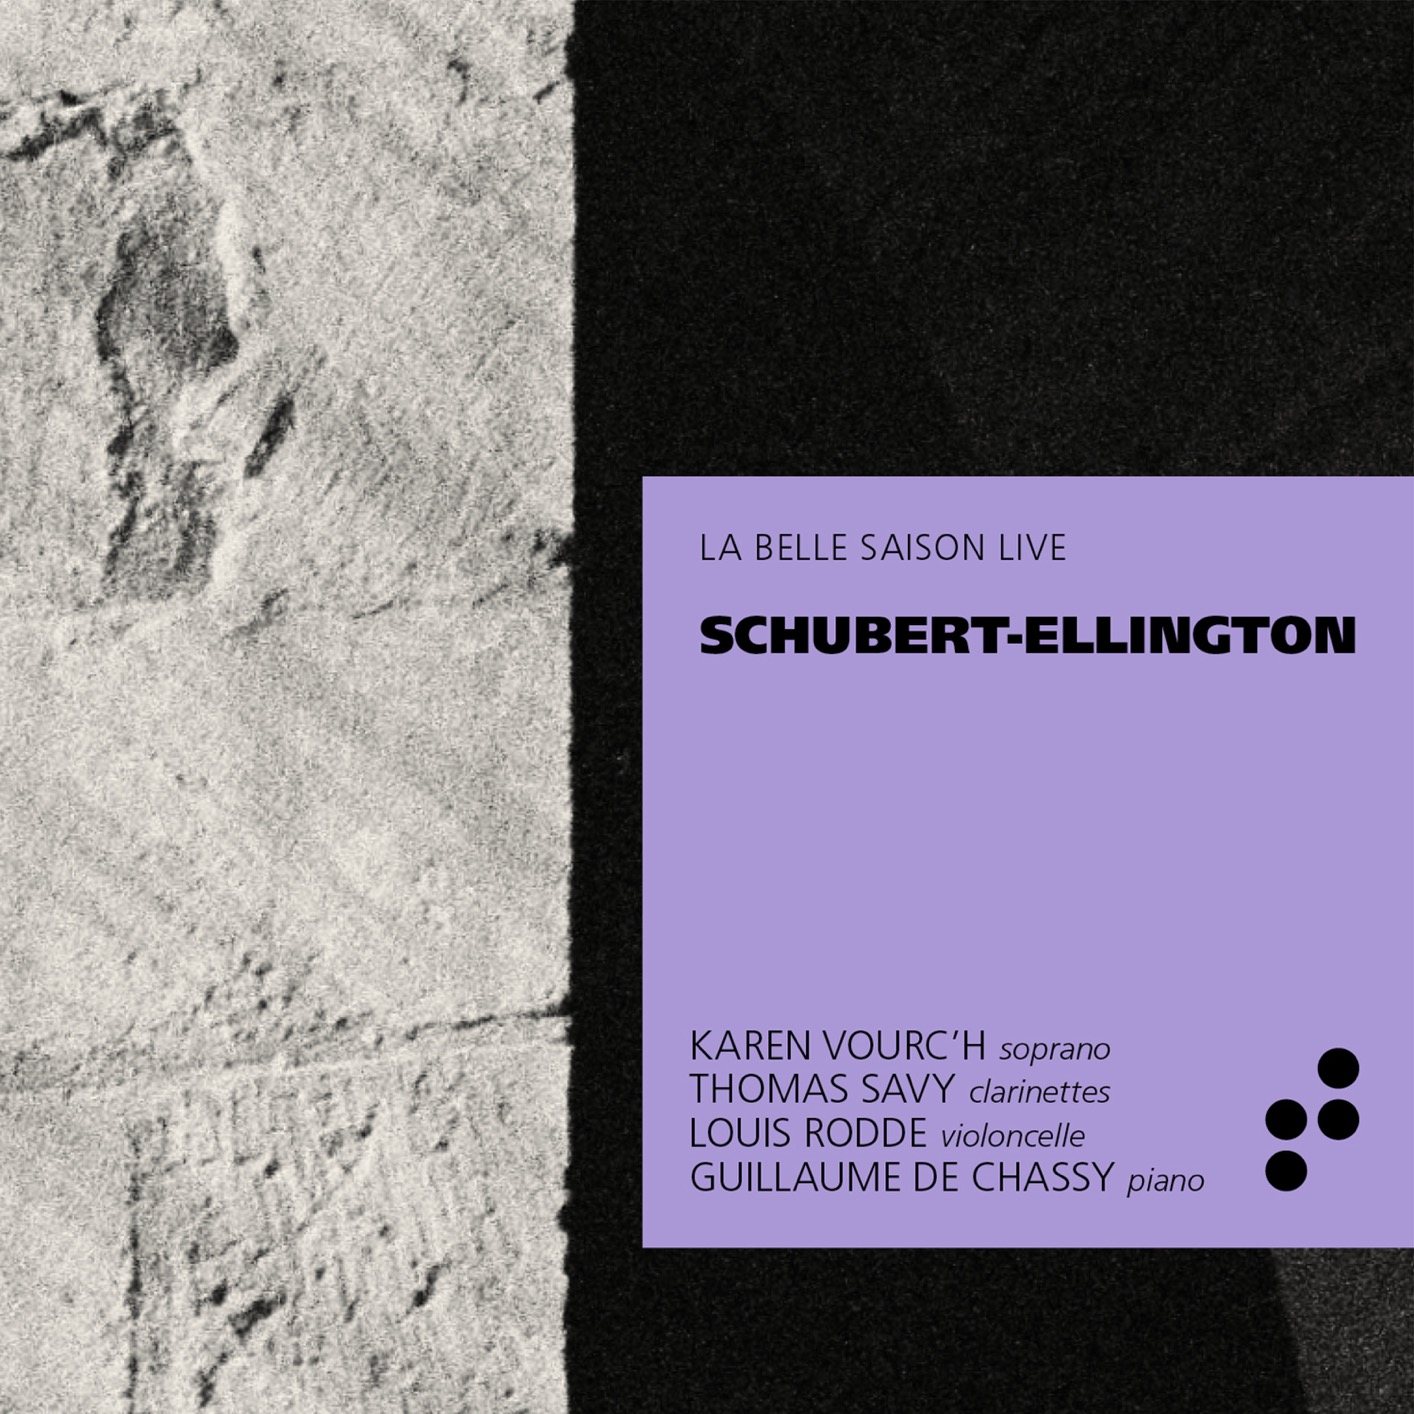 Thomas Savy, Louis Rodde, Guillaume de Chassy, Karen Vourc’h - Schubert-Ellington (2019) [FLAC 24bit/88,2kHz]